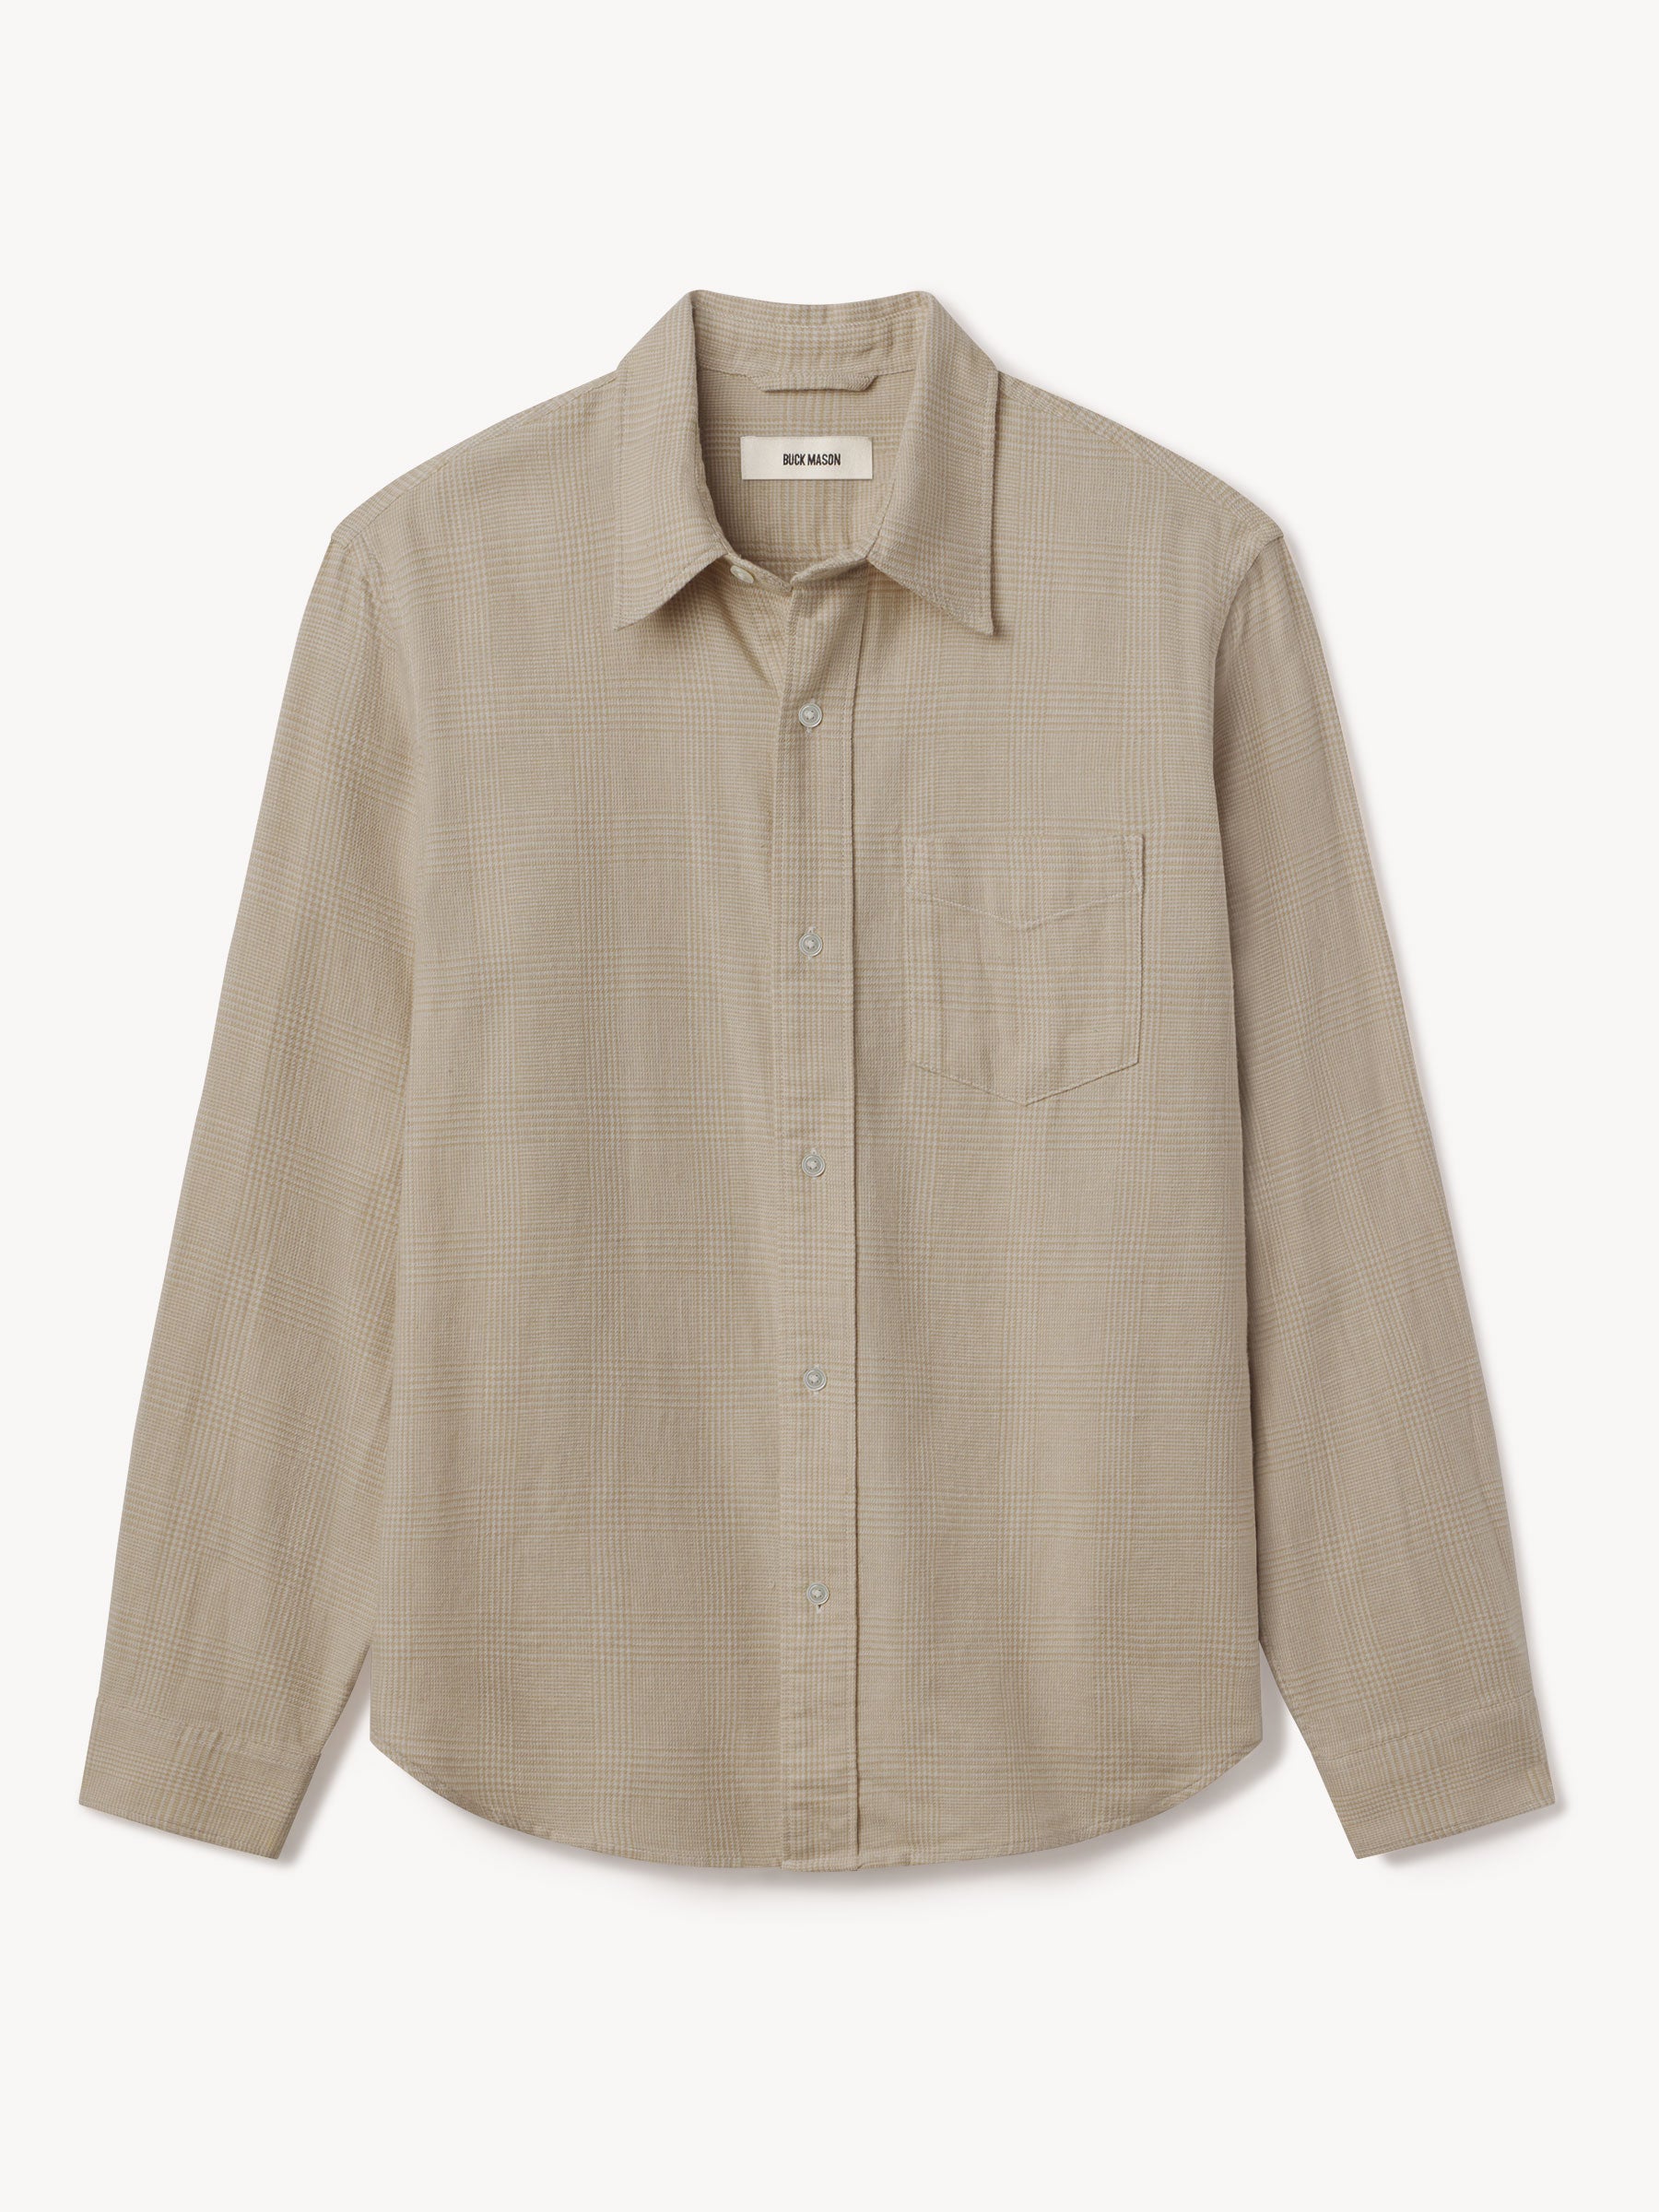 Buck Mason Men's Heather Oat/Safari Glen Plaid Pacific Twill One Pocket Shirt in Heather Oat Safari Glen Plaid, Size Small | Cotton/Flannel